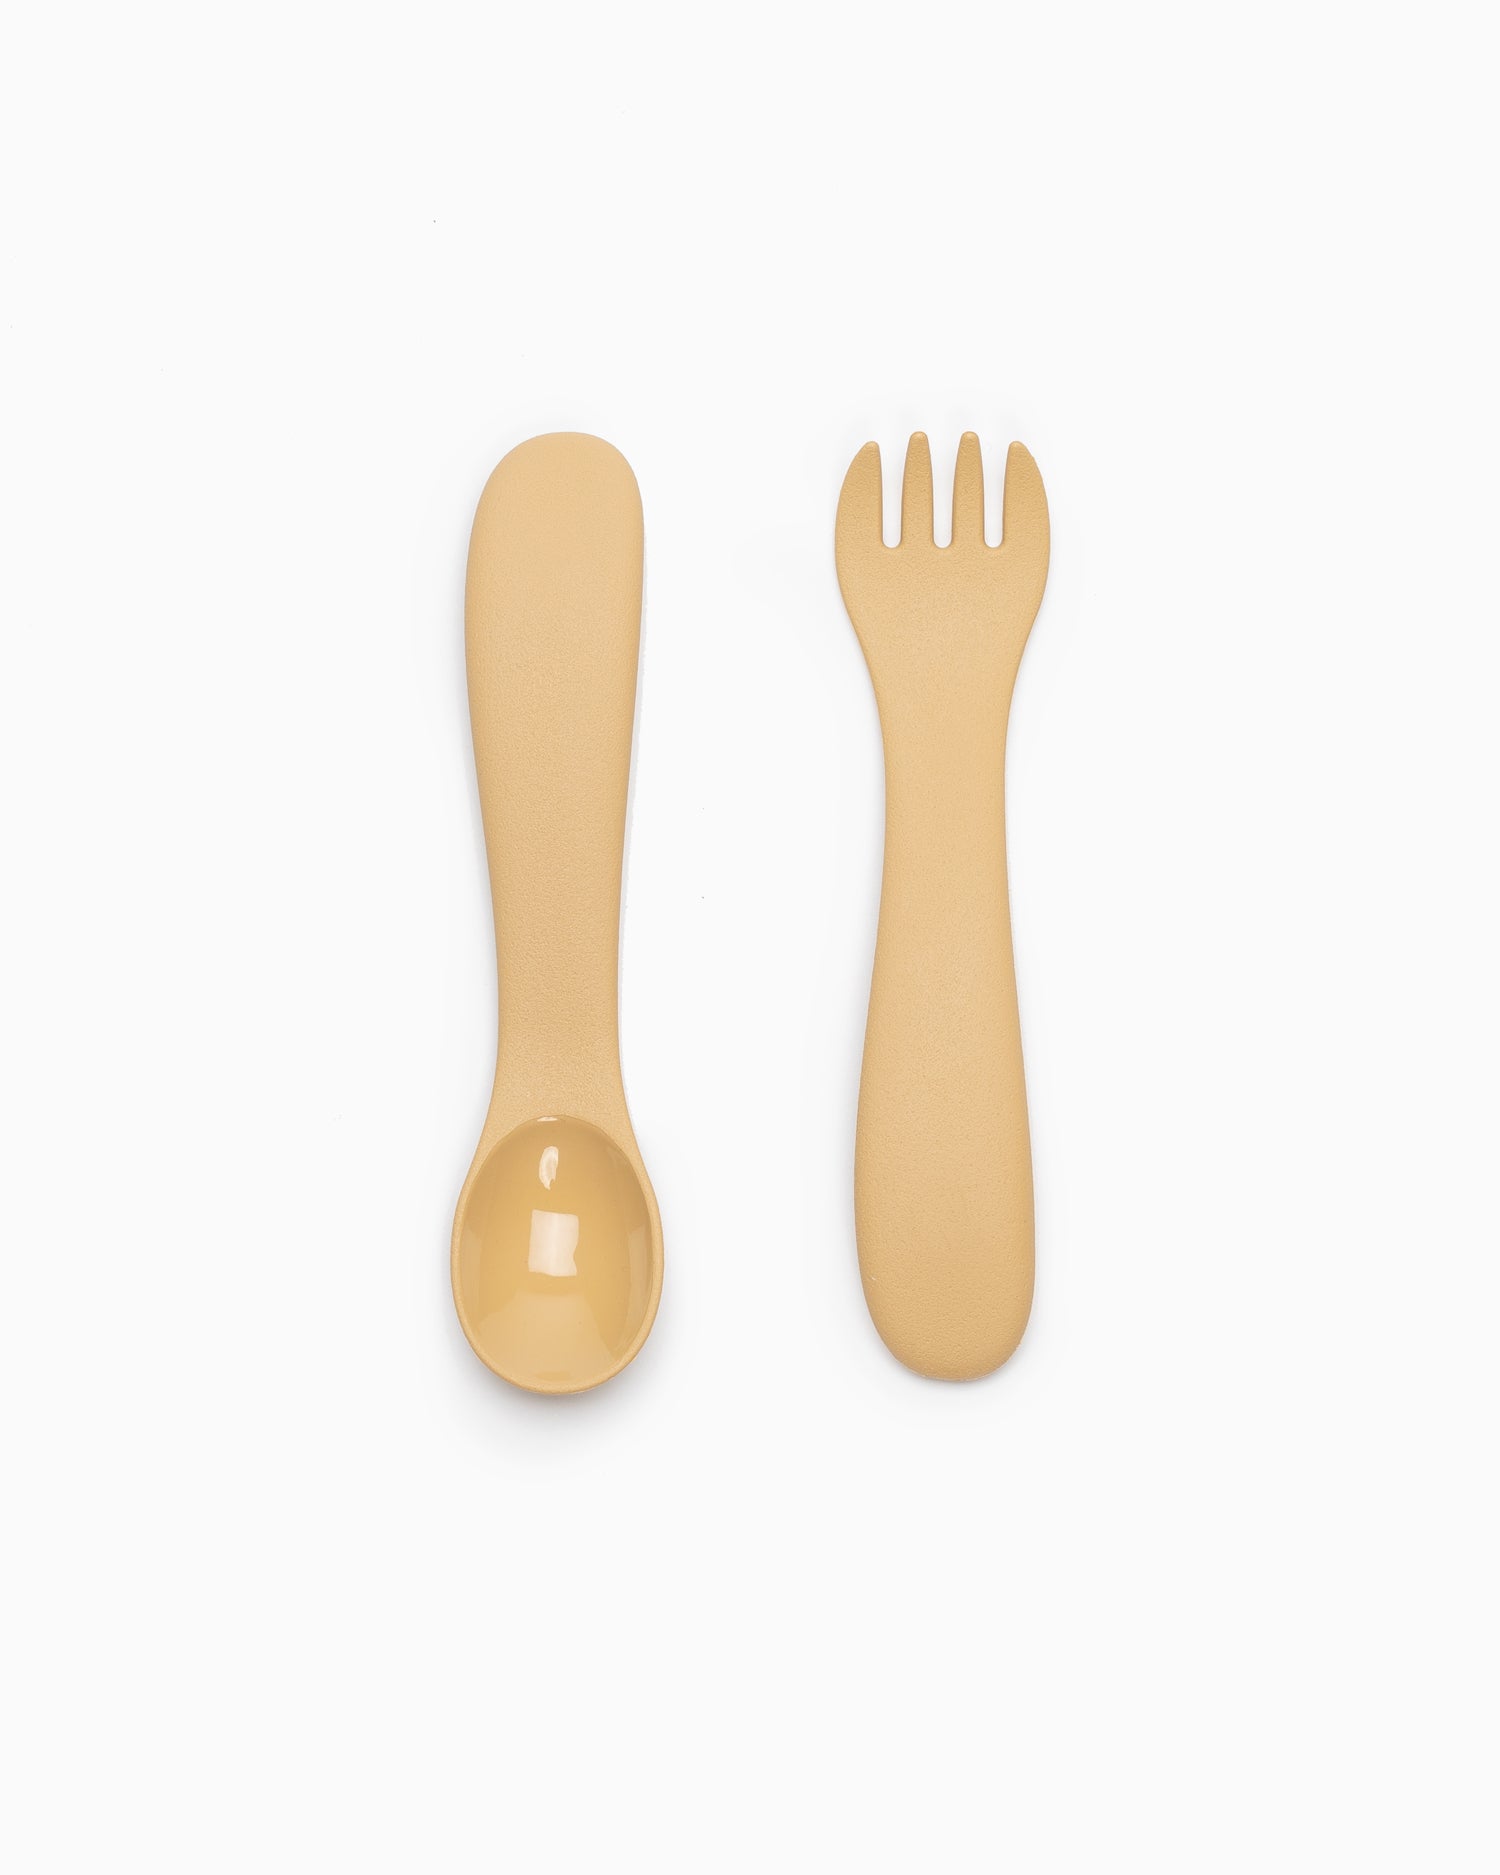 Bonbo Spoon & Fork - Yellow